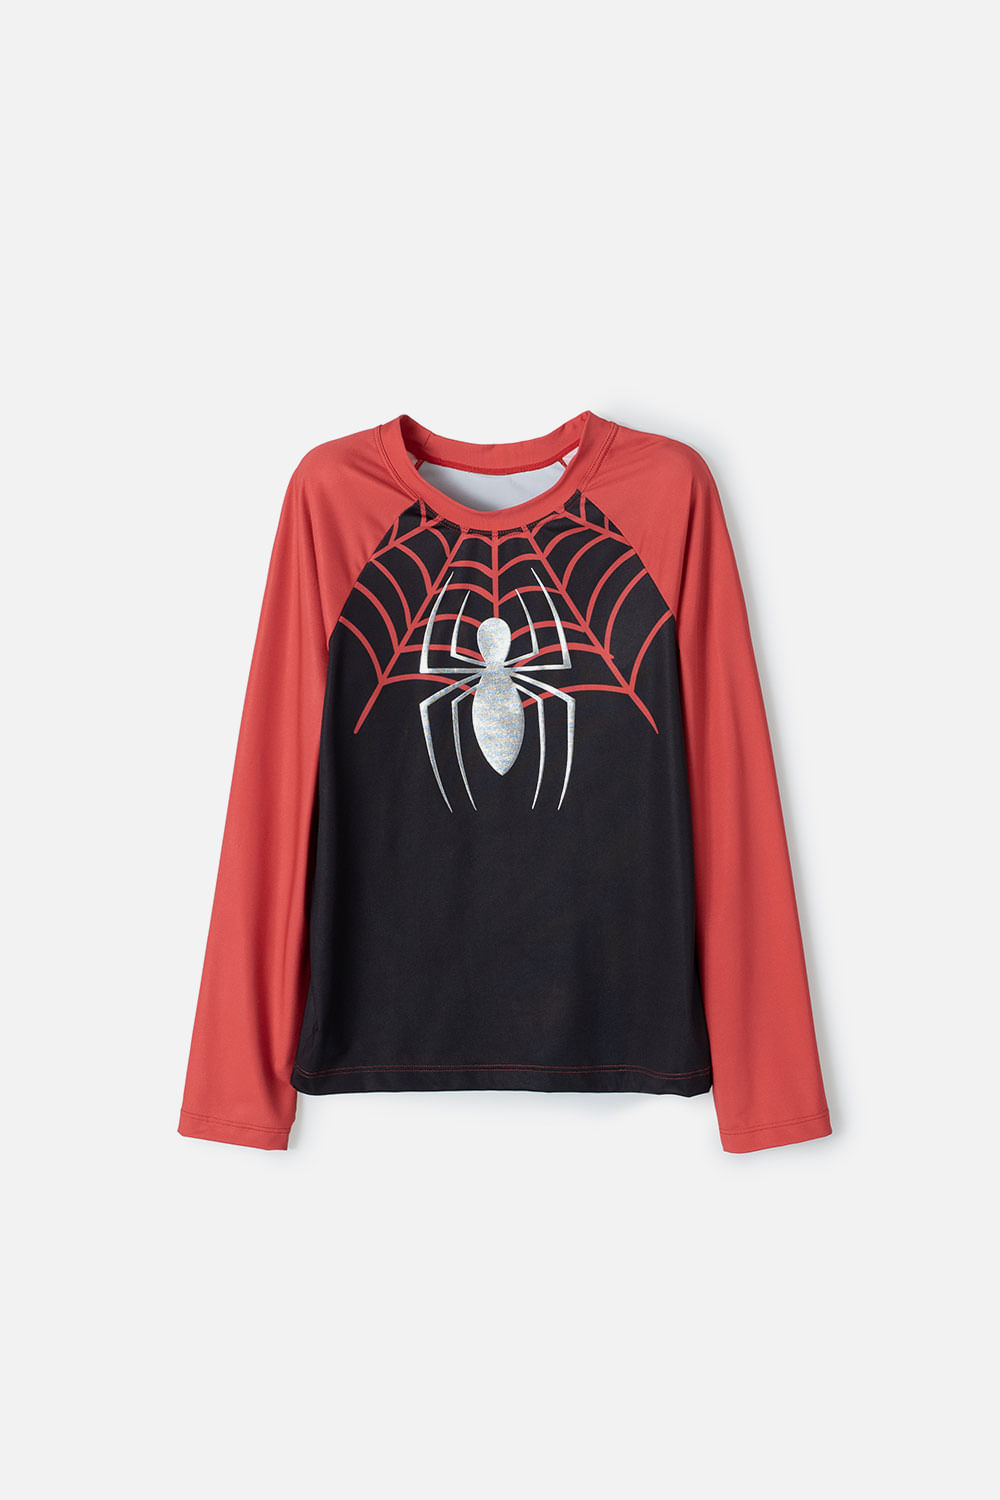 Camiseta de baño de Spider-man manga larga negro y rojo para niño 4-0